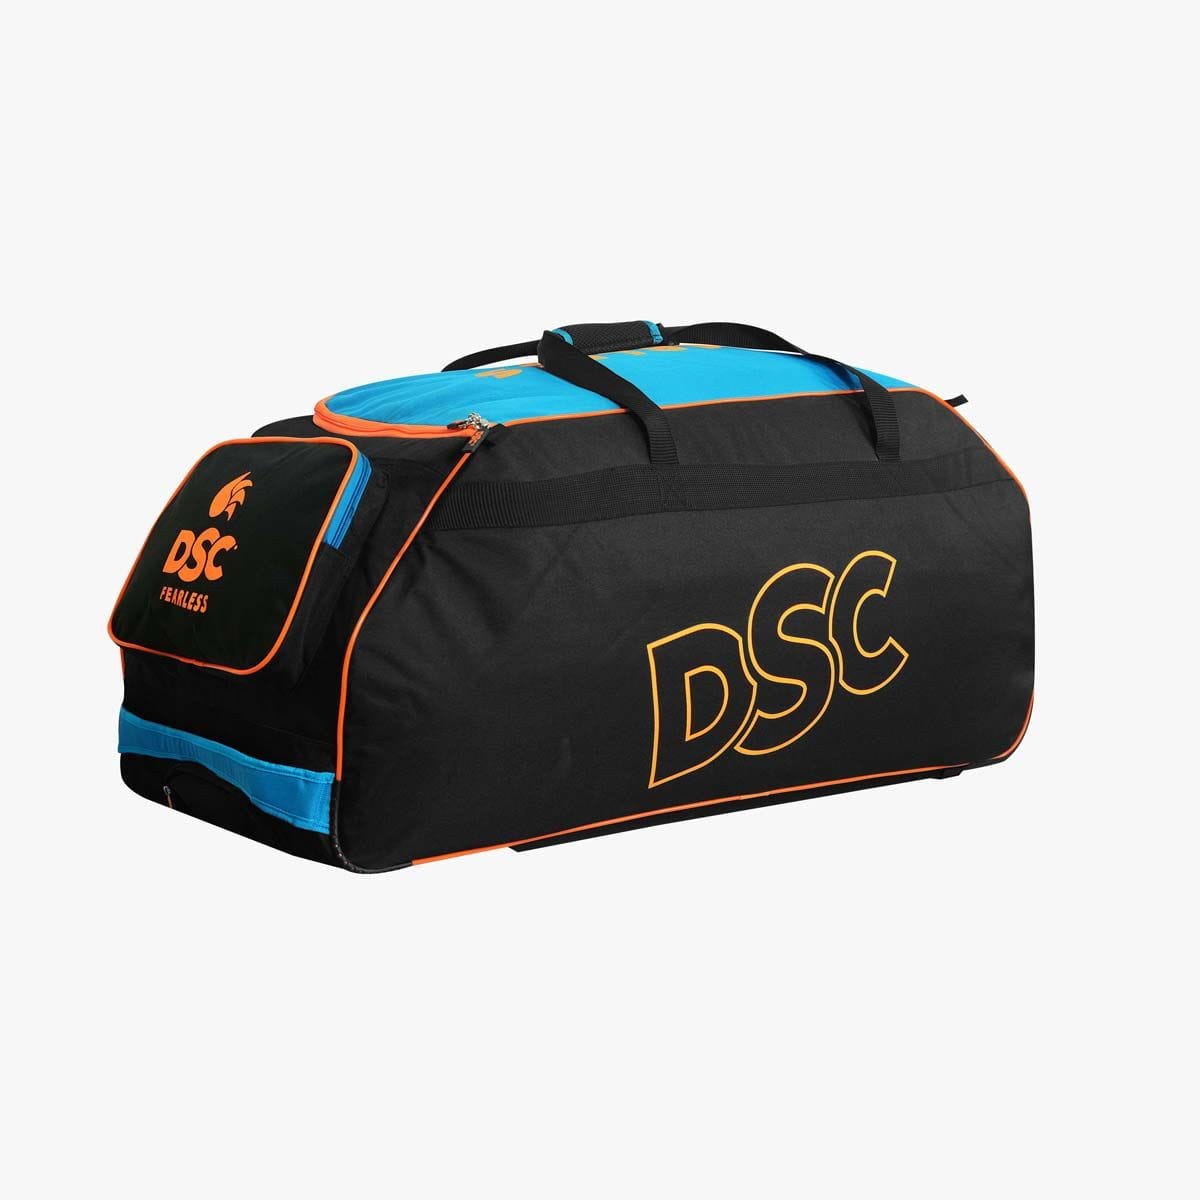 Adidas Cricket Bags DSC Intense Speed Wheels Cricket Bag